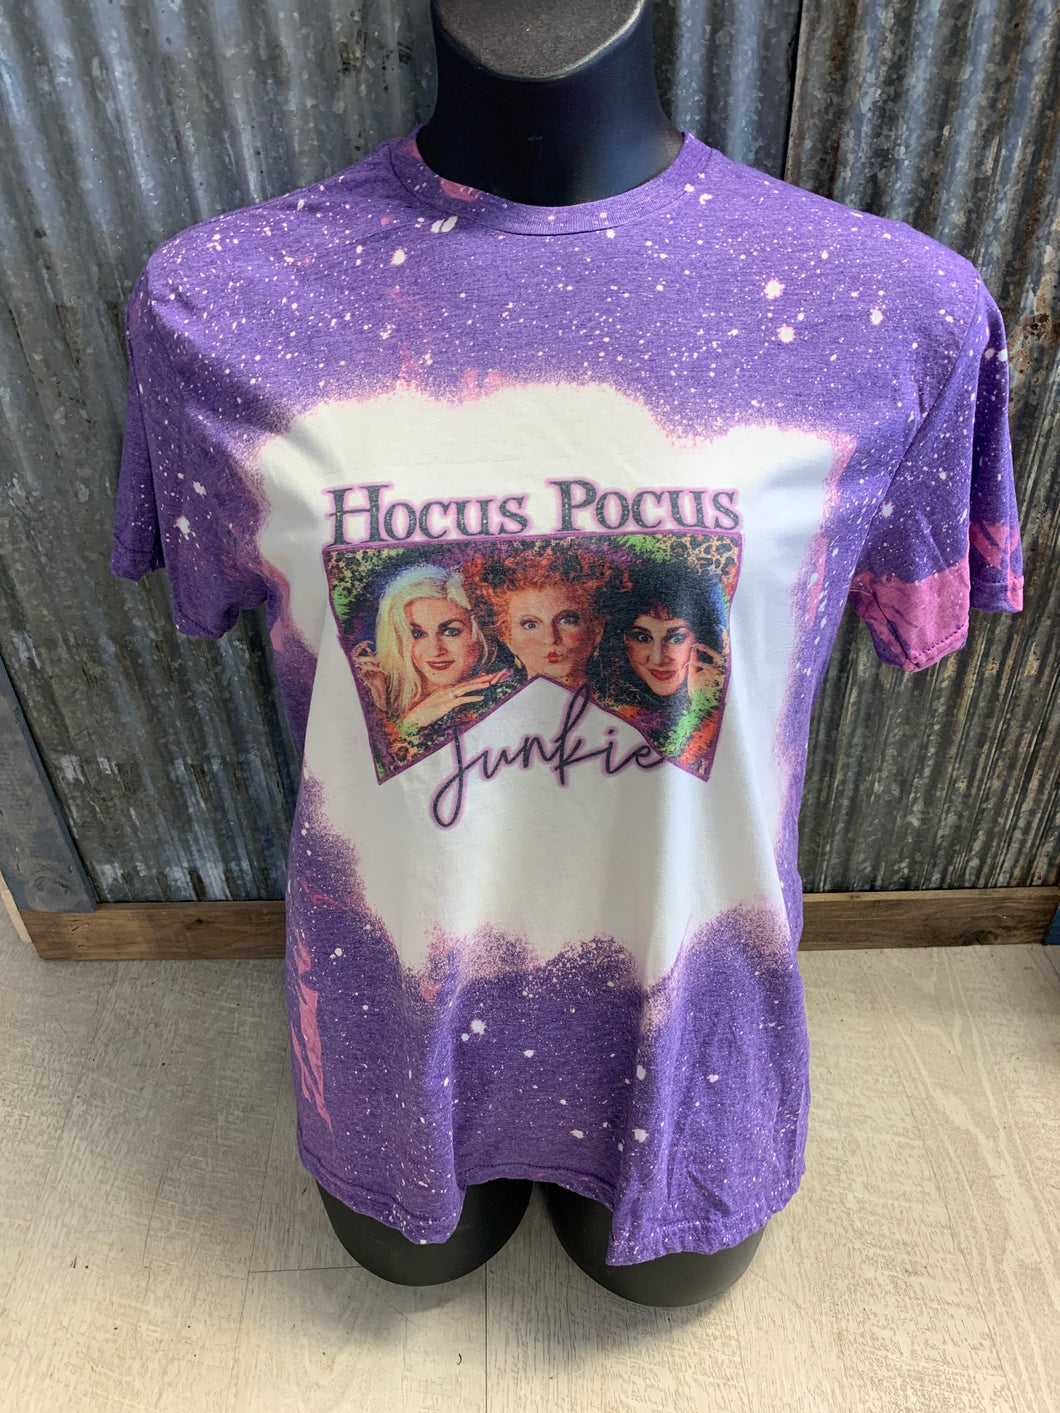 Hocus pocus bleach t-shirt